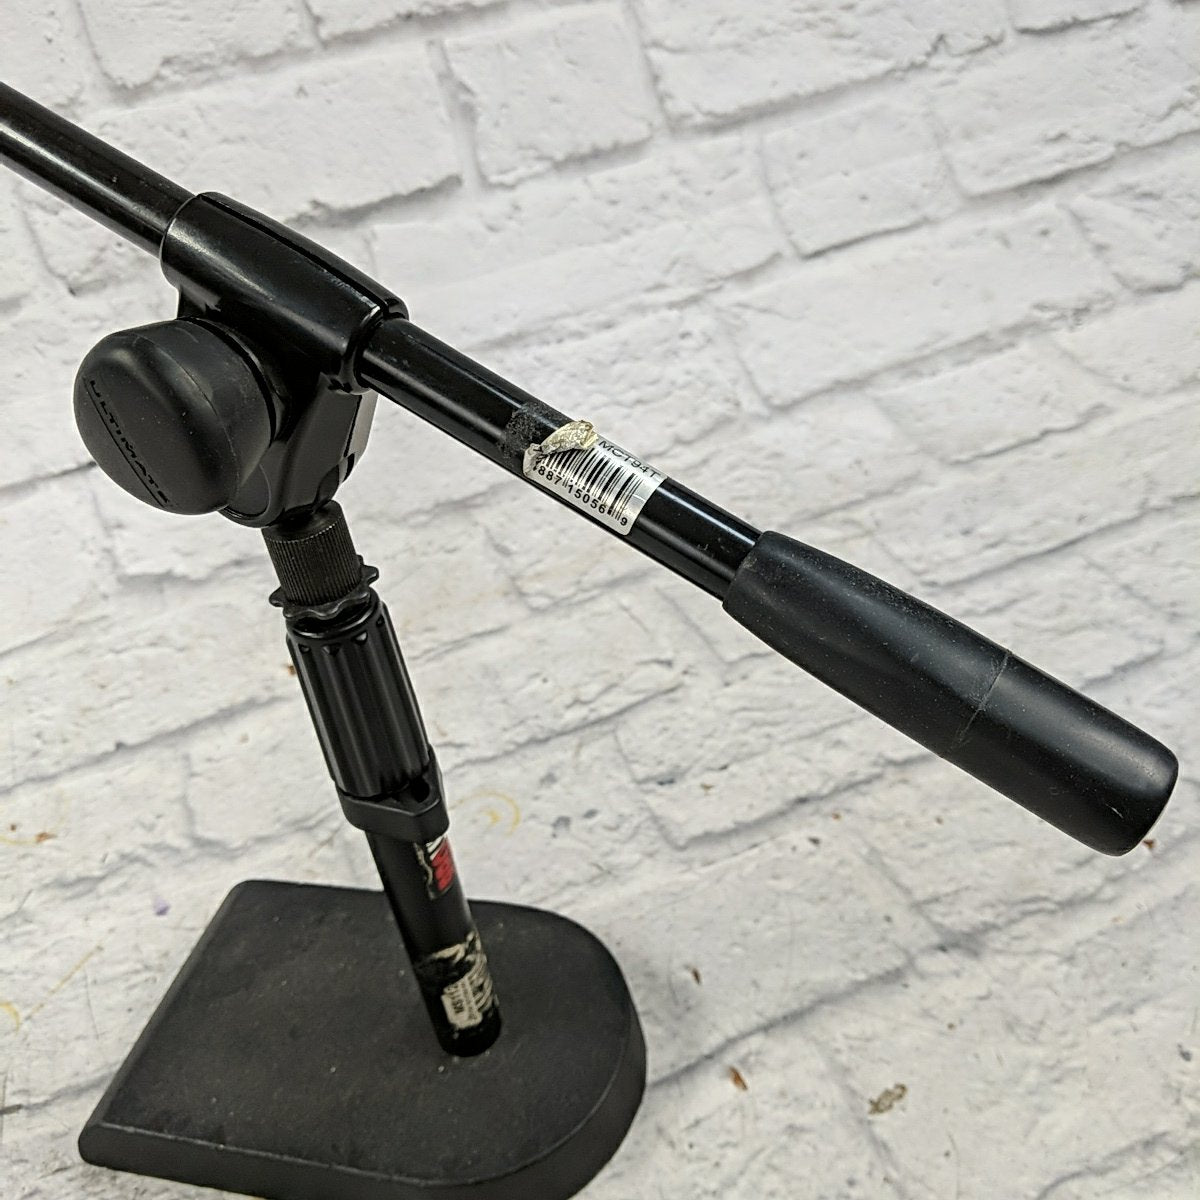 Proline Telescoping Boom Microphone Stand Black 